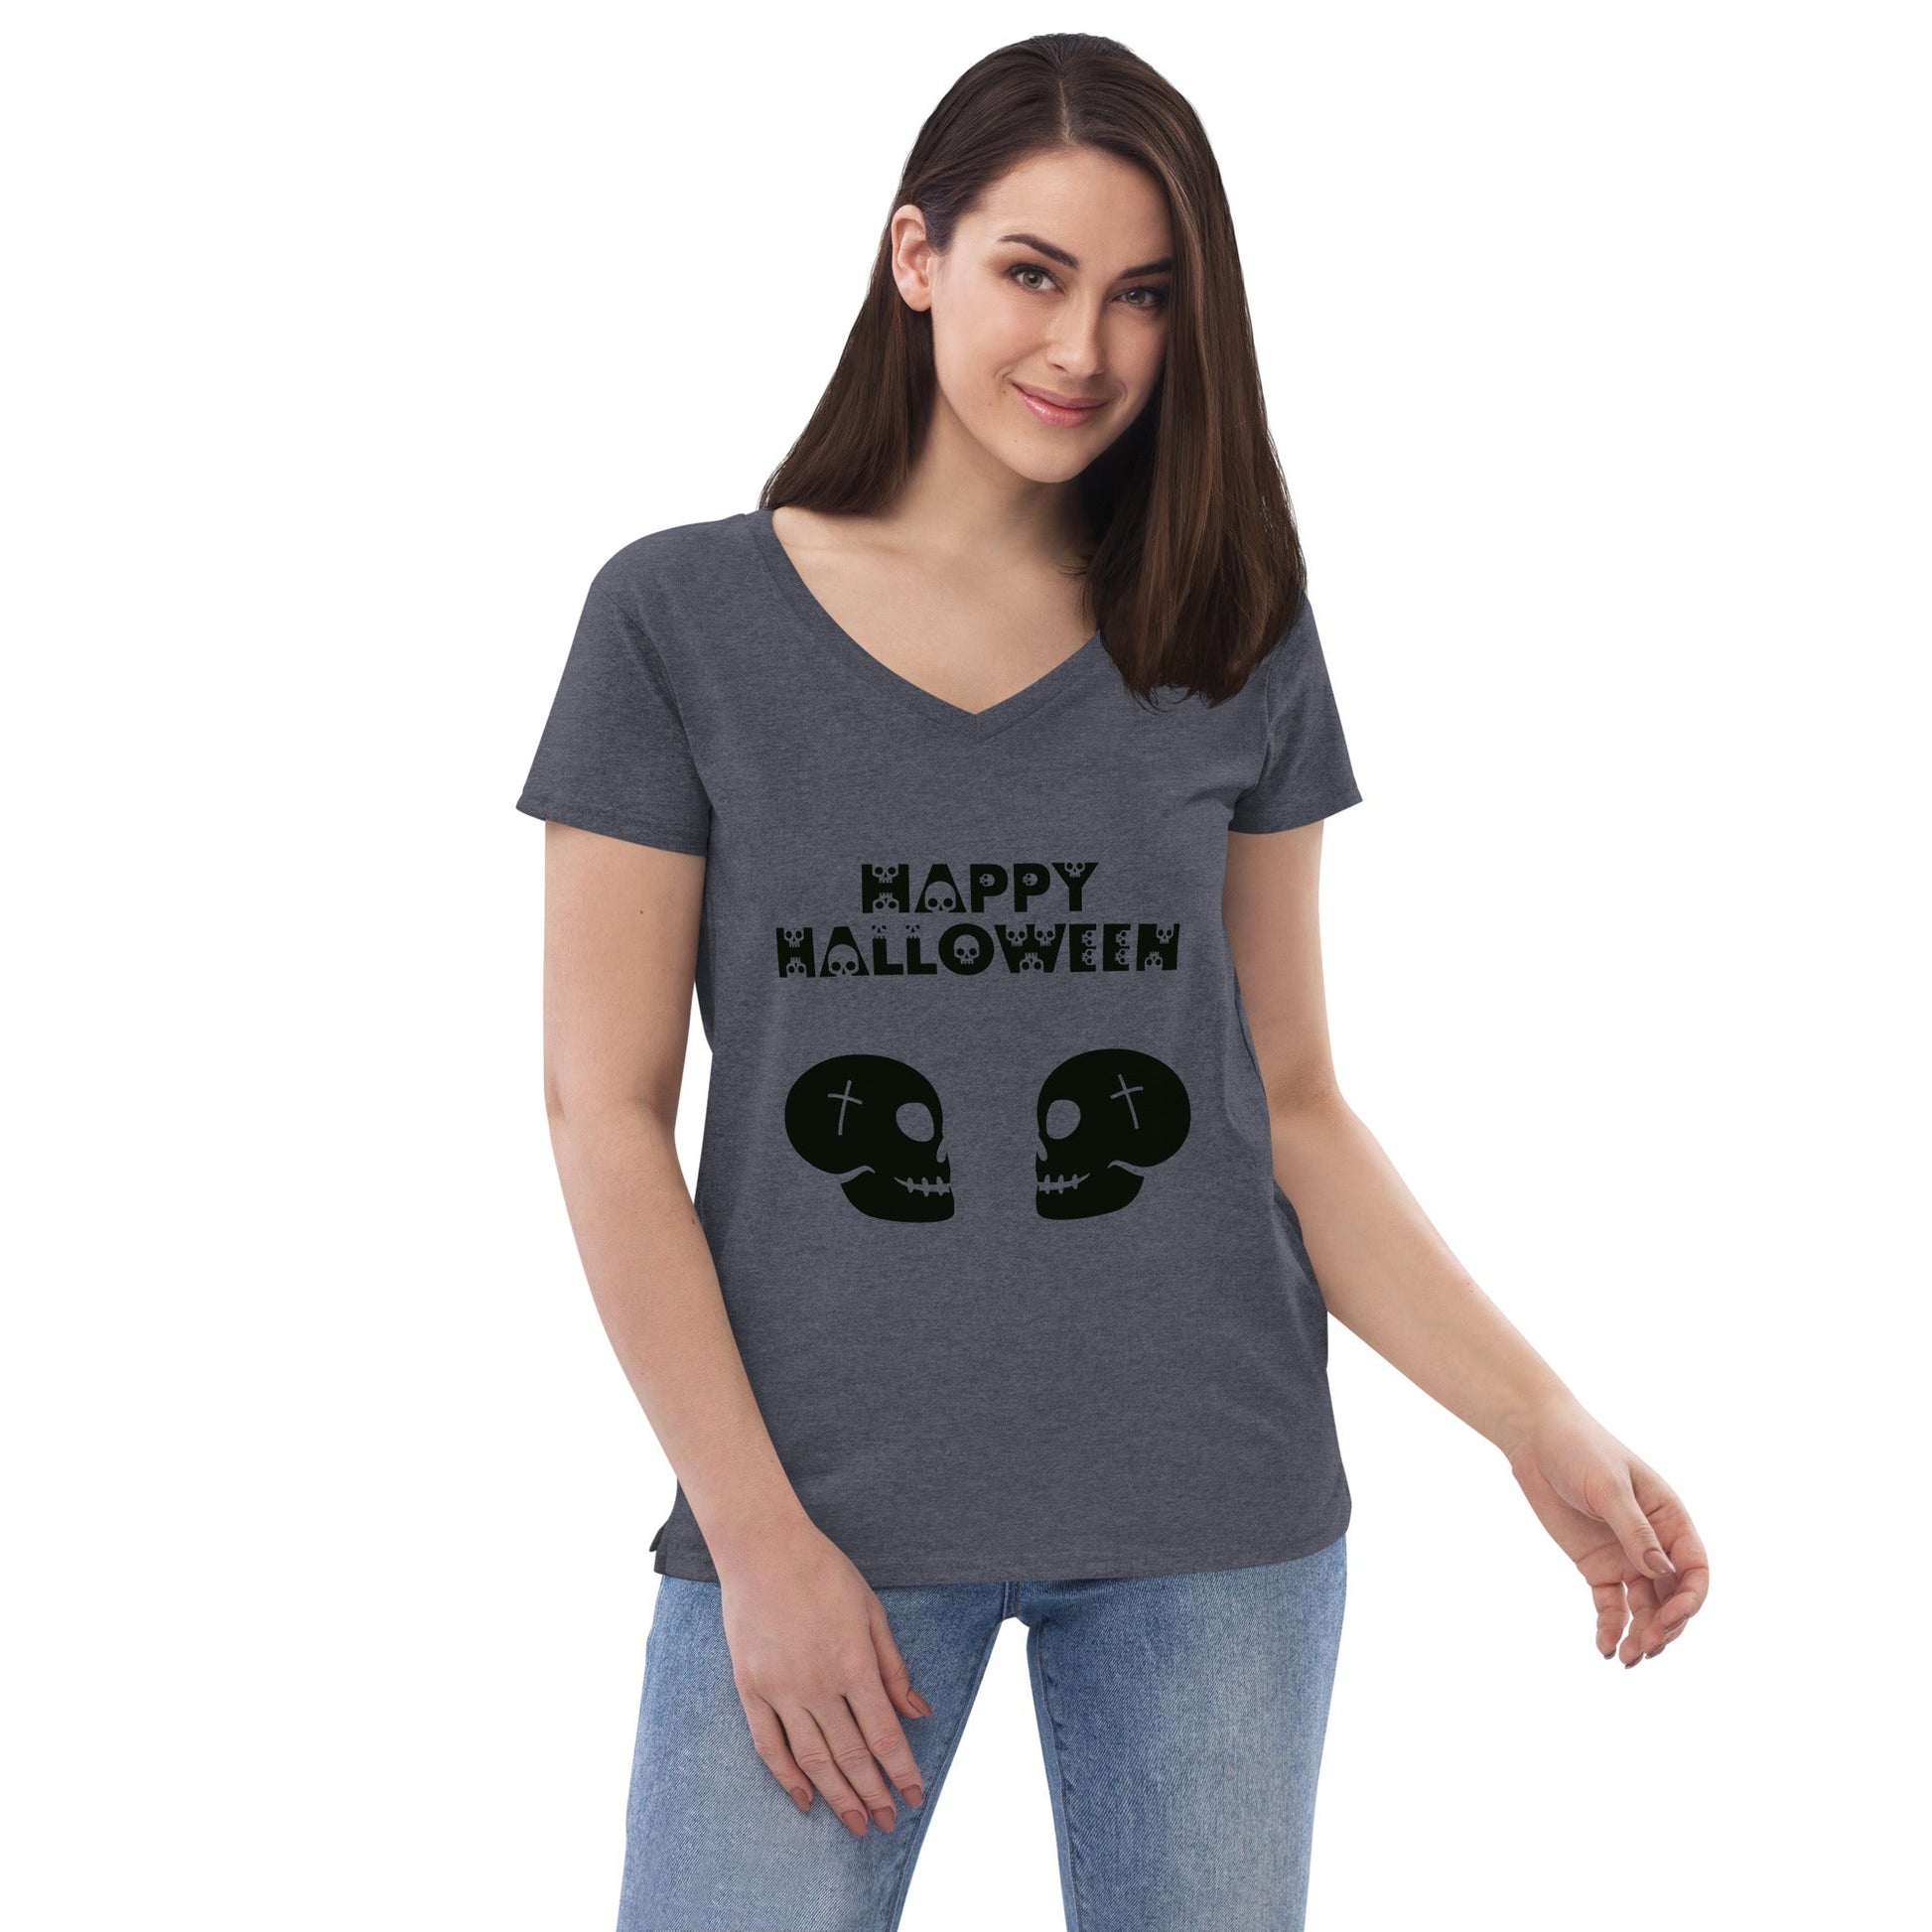 Happy Halloween in Black Skull Font with 2 Facing Skulls Women’s recycled v-neck t-shirt - Lizard Vigilante